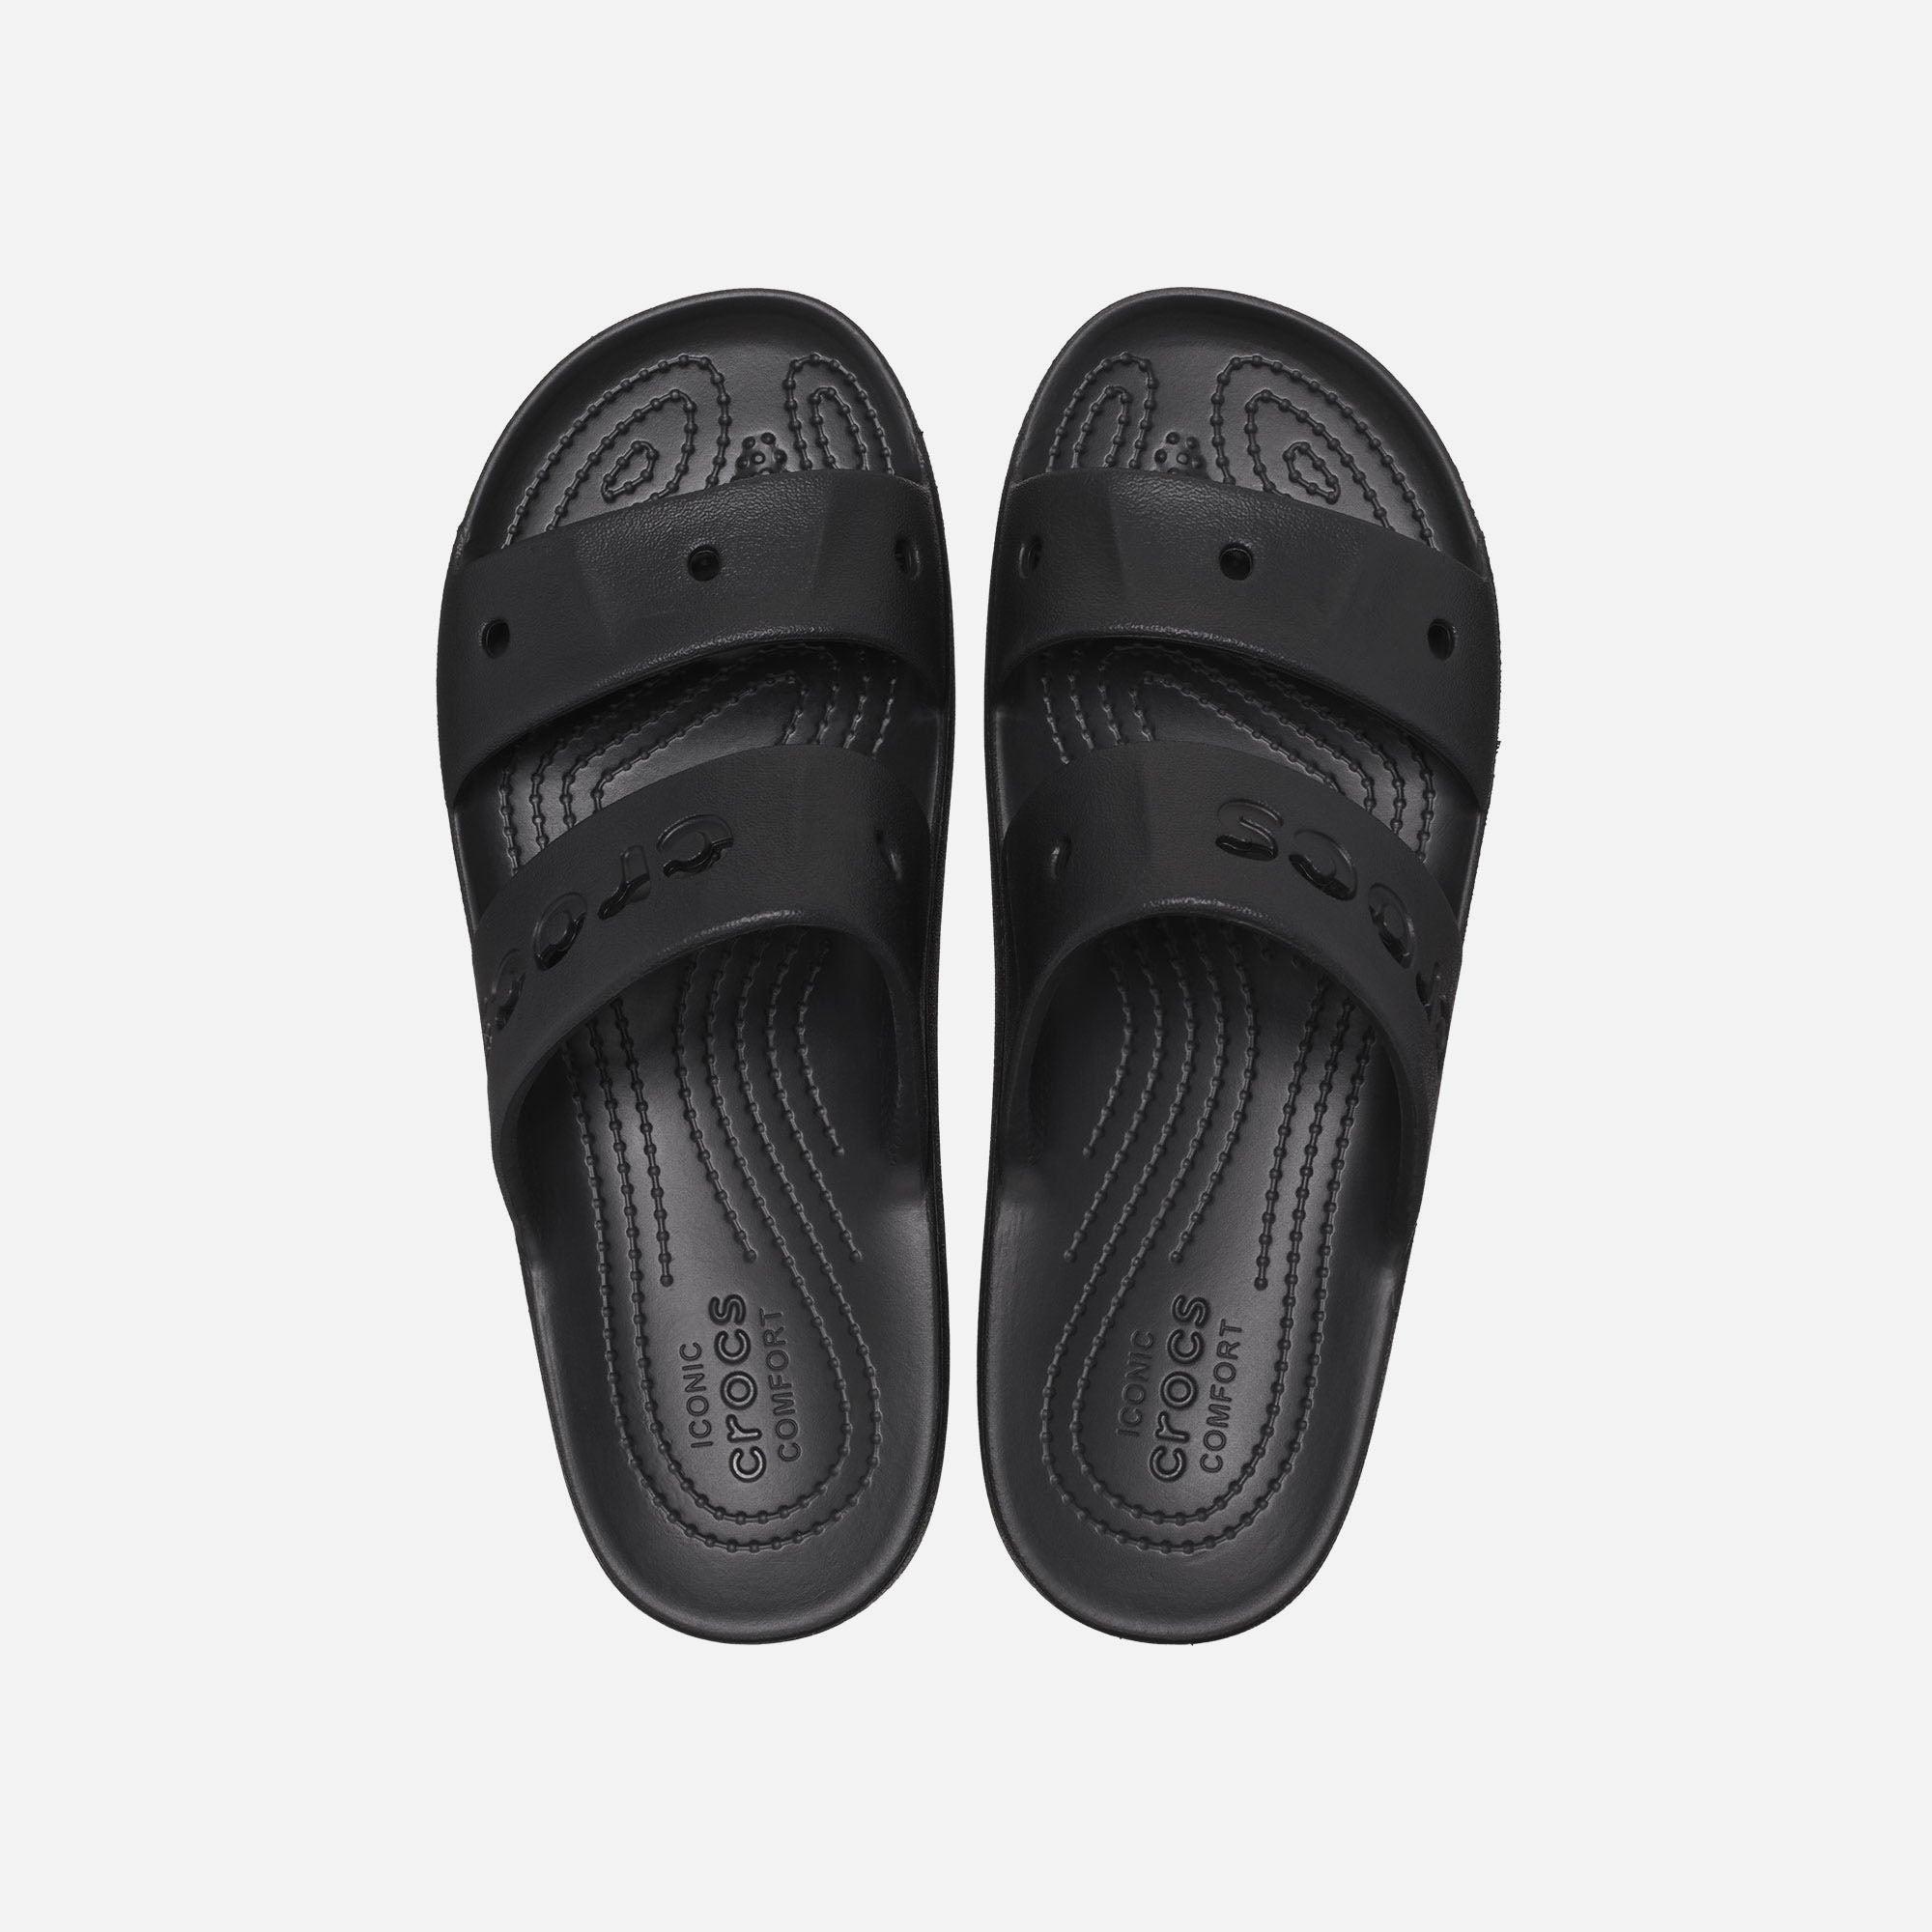 Giày sandal nữ Crocs Baya Platform - 208188-001